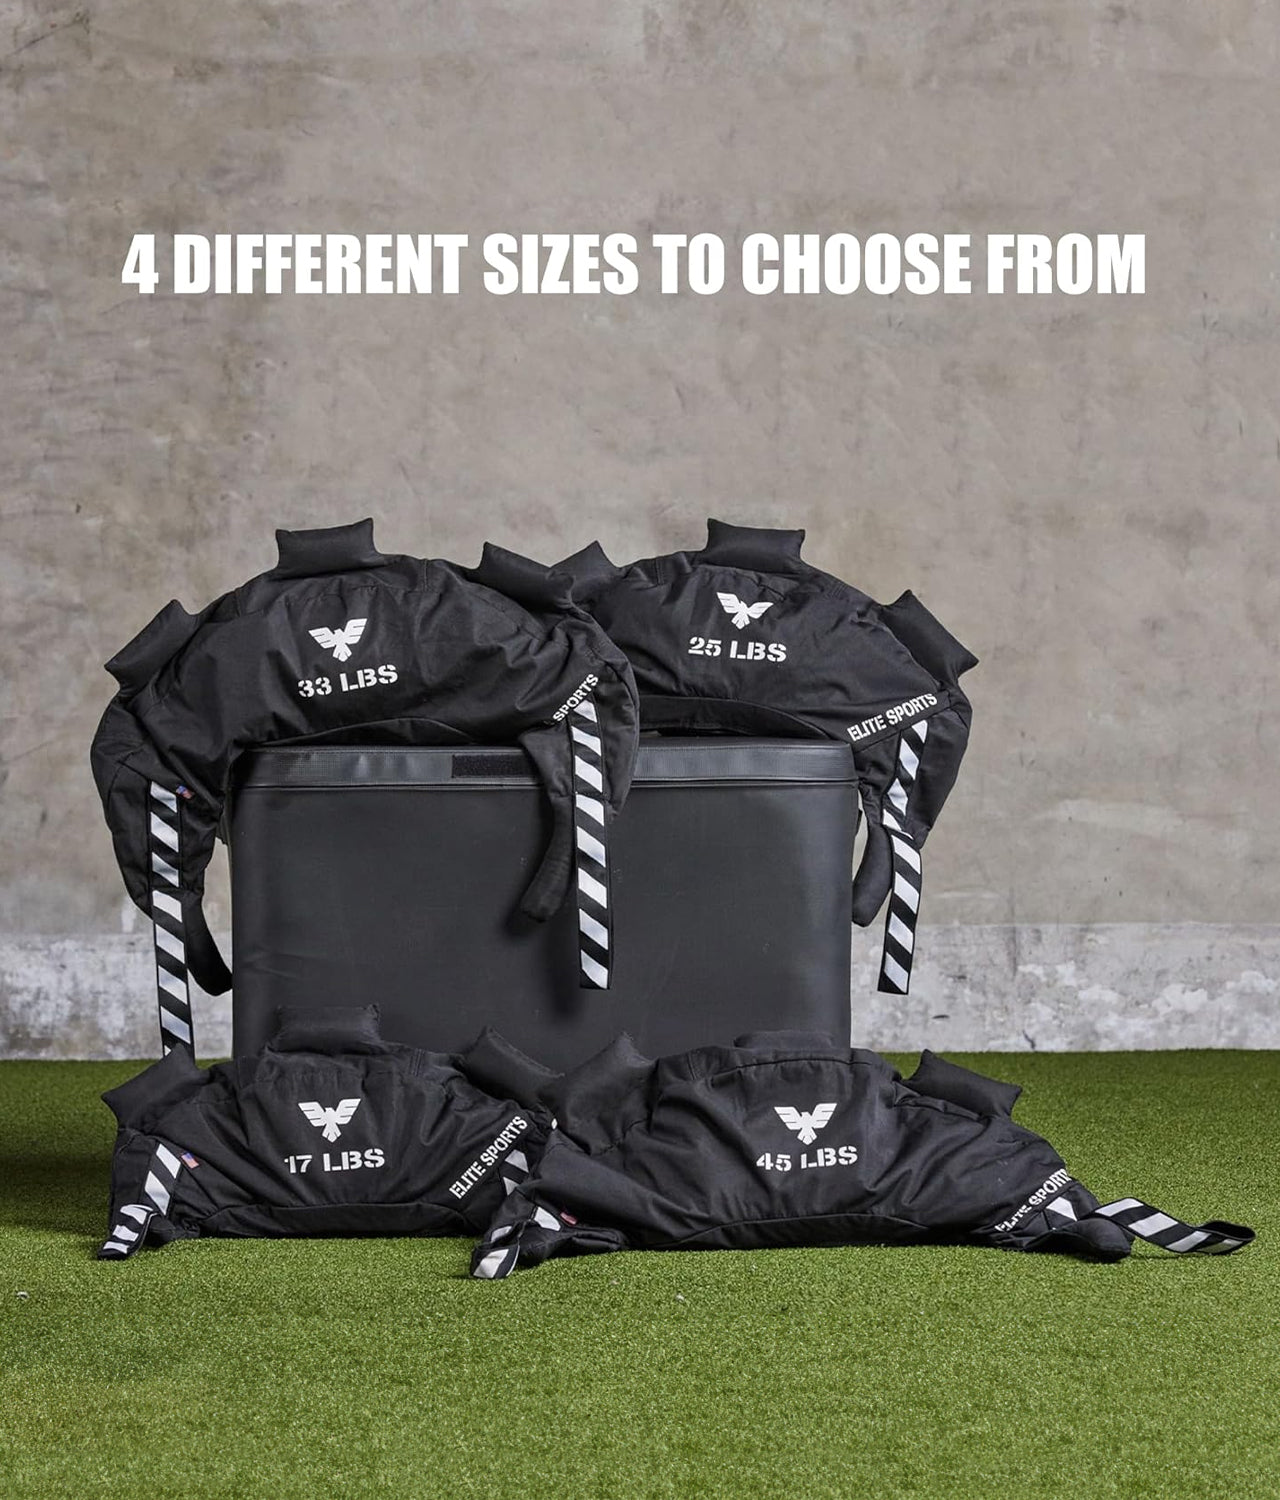 Elite Sports Black Bulgarian Sand Bag 33 LBS 4Different Sizes to Choose